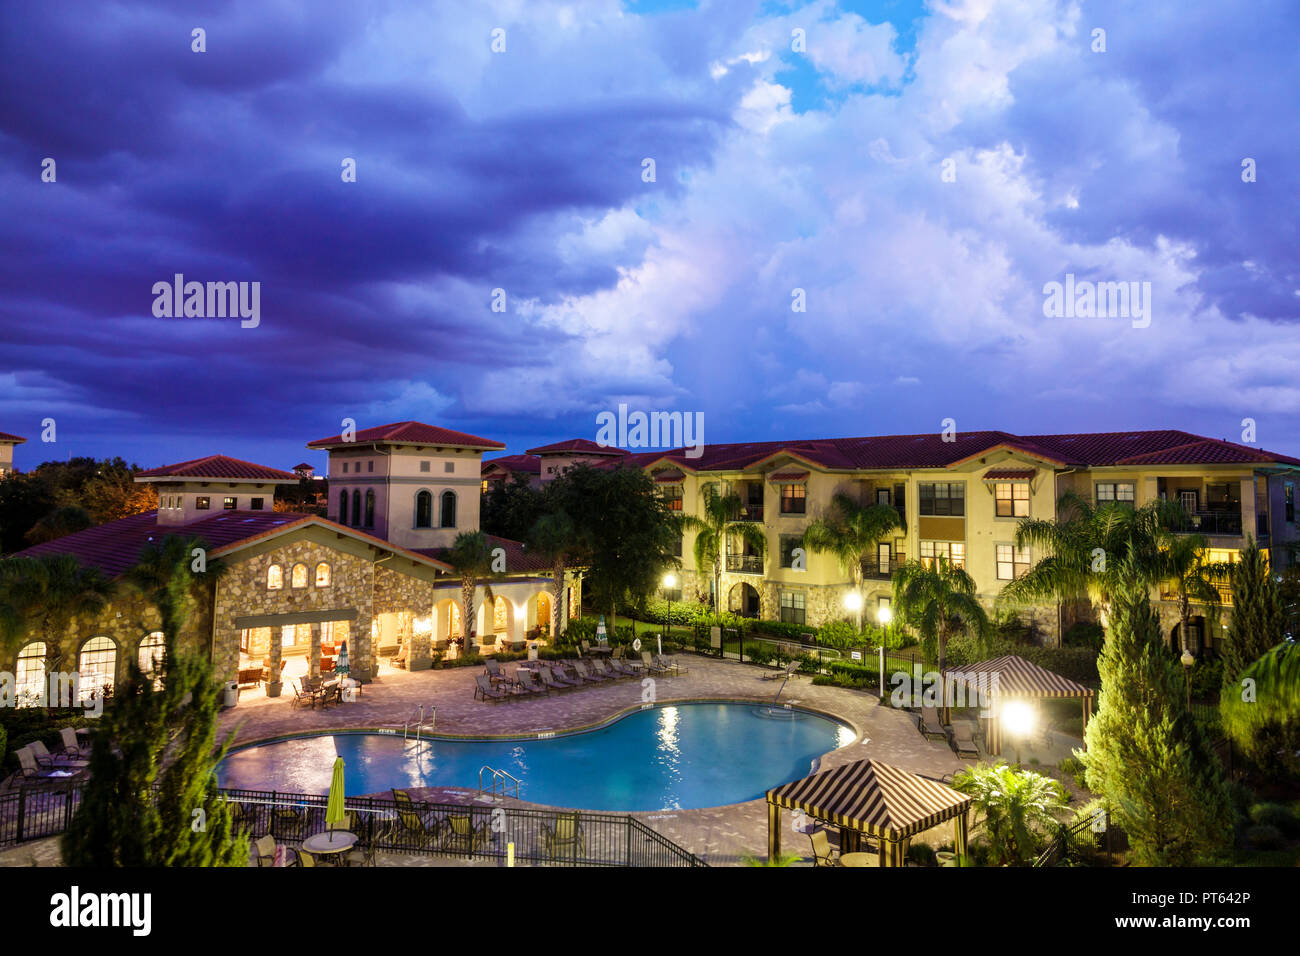 Florida,Davenport,Bella Piazza,rental condominiums,pool deck area,night evening dusk,dusk,FL180731220 Stock Photo